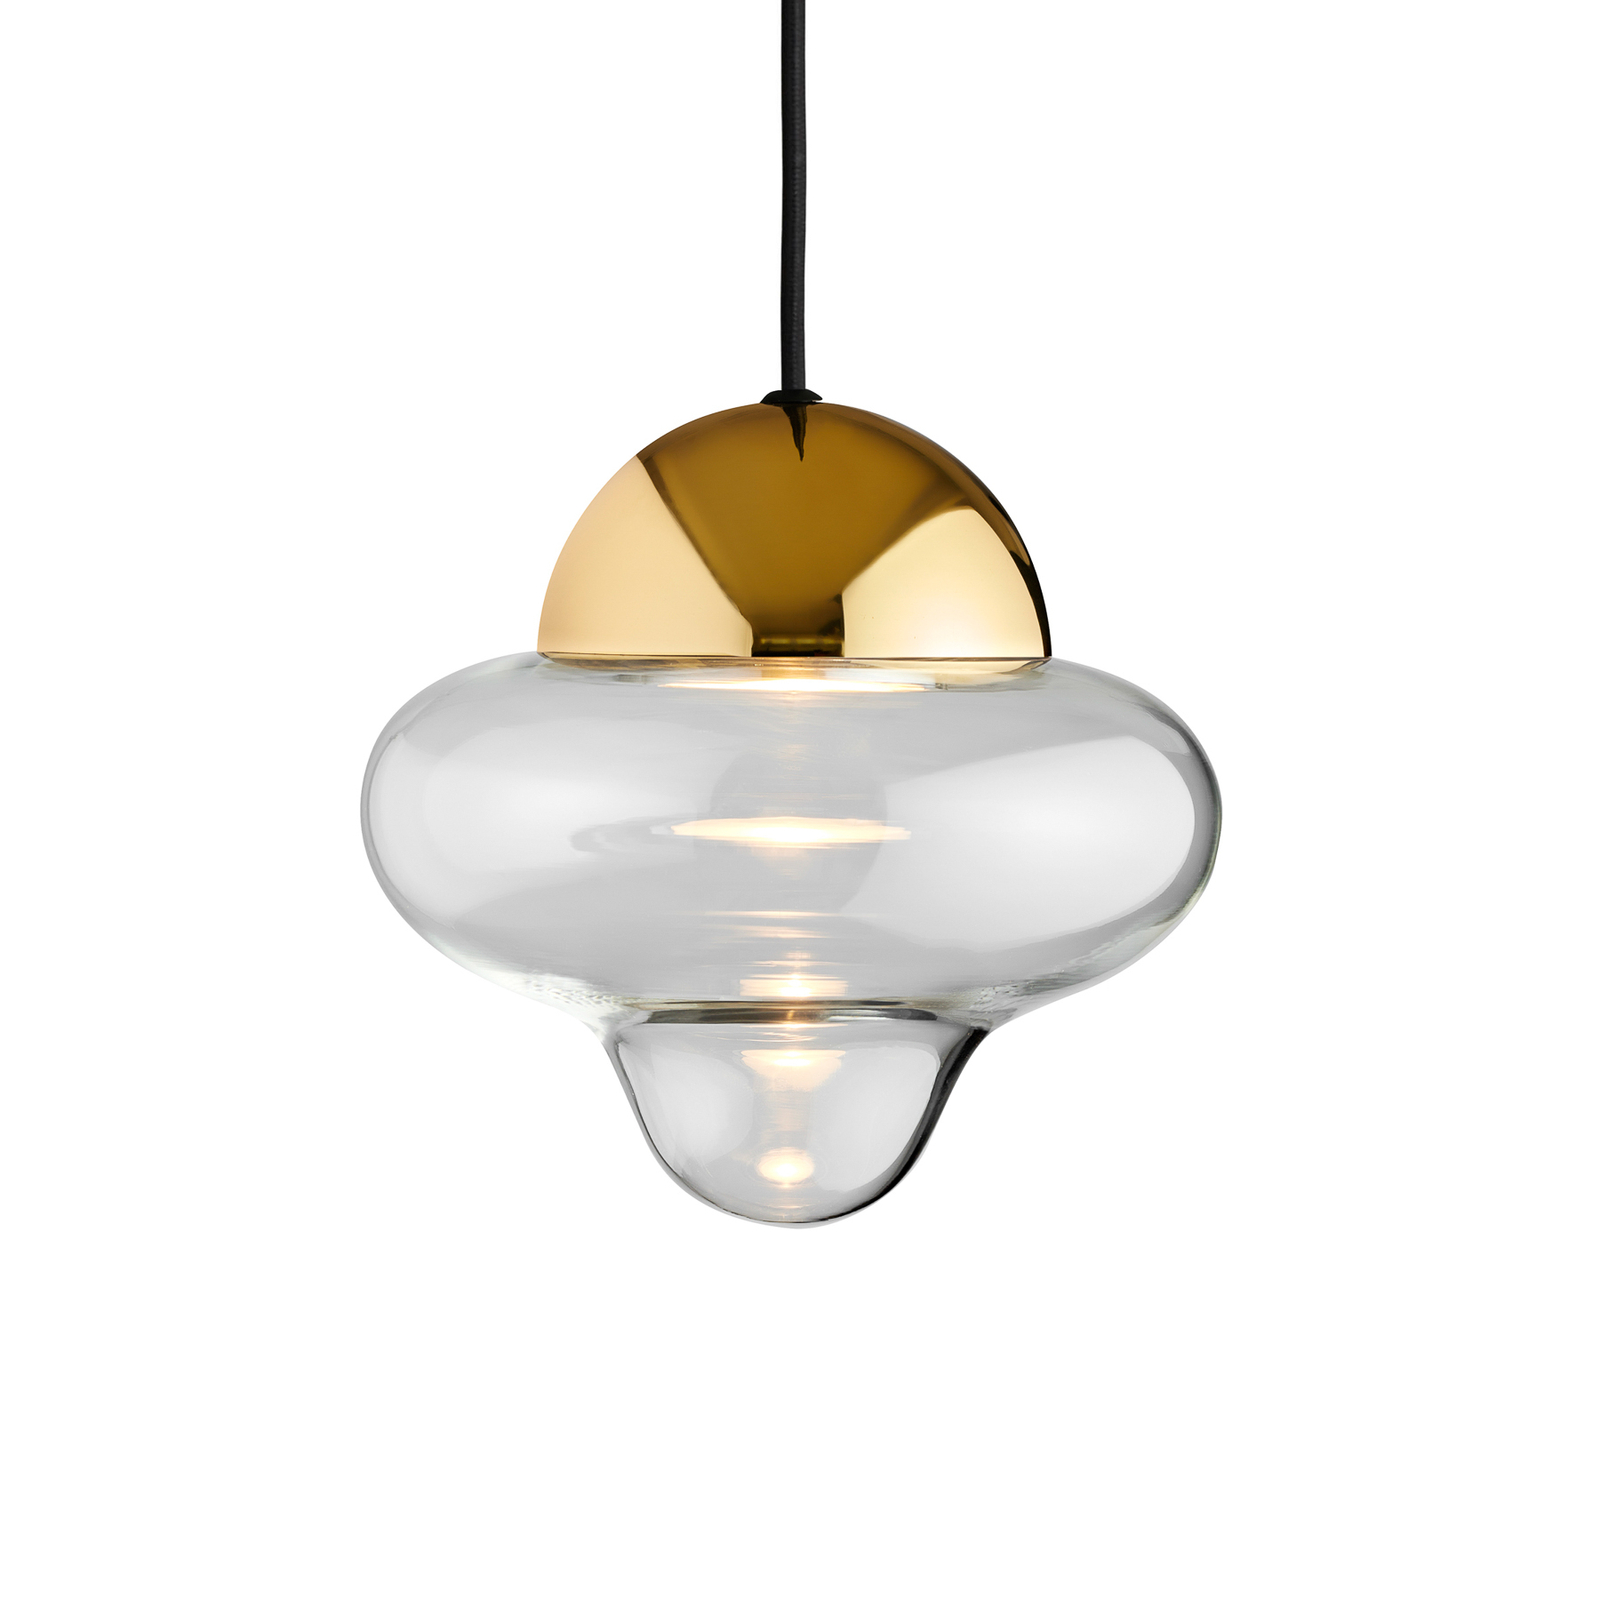 Orehova LED viseča luč, prozorna / zlata barva, Ø 18,5 cm, steklo